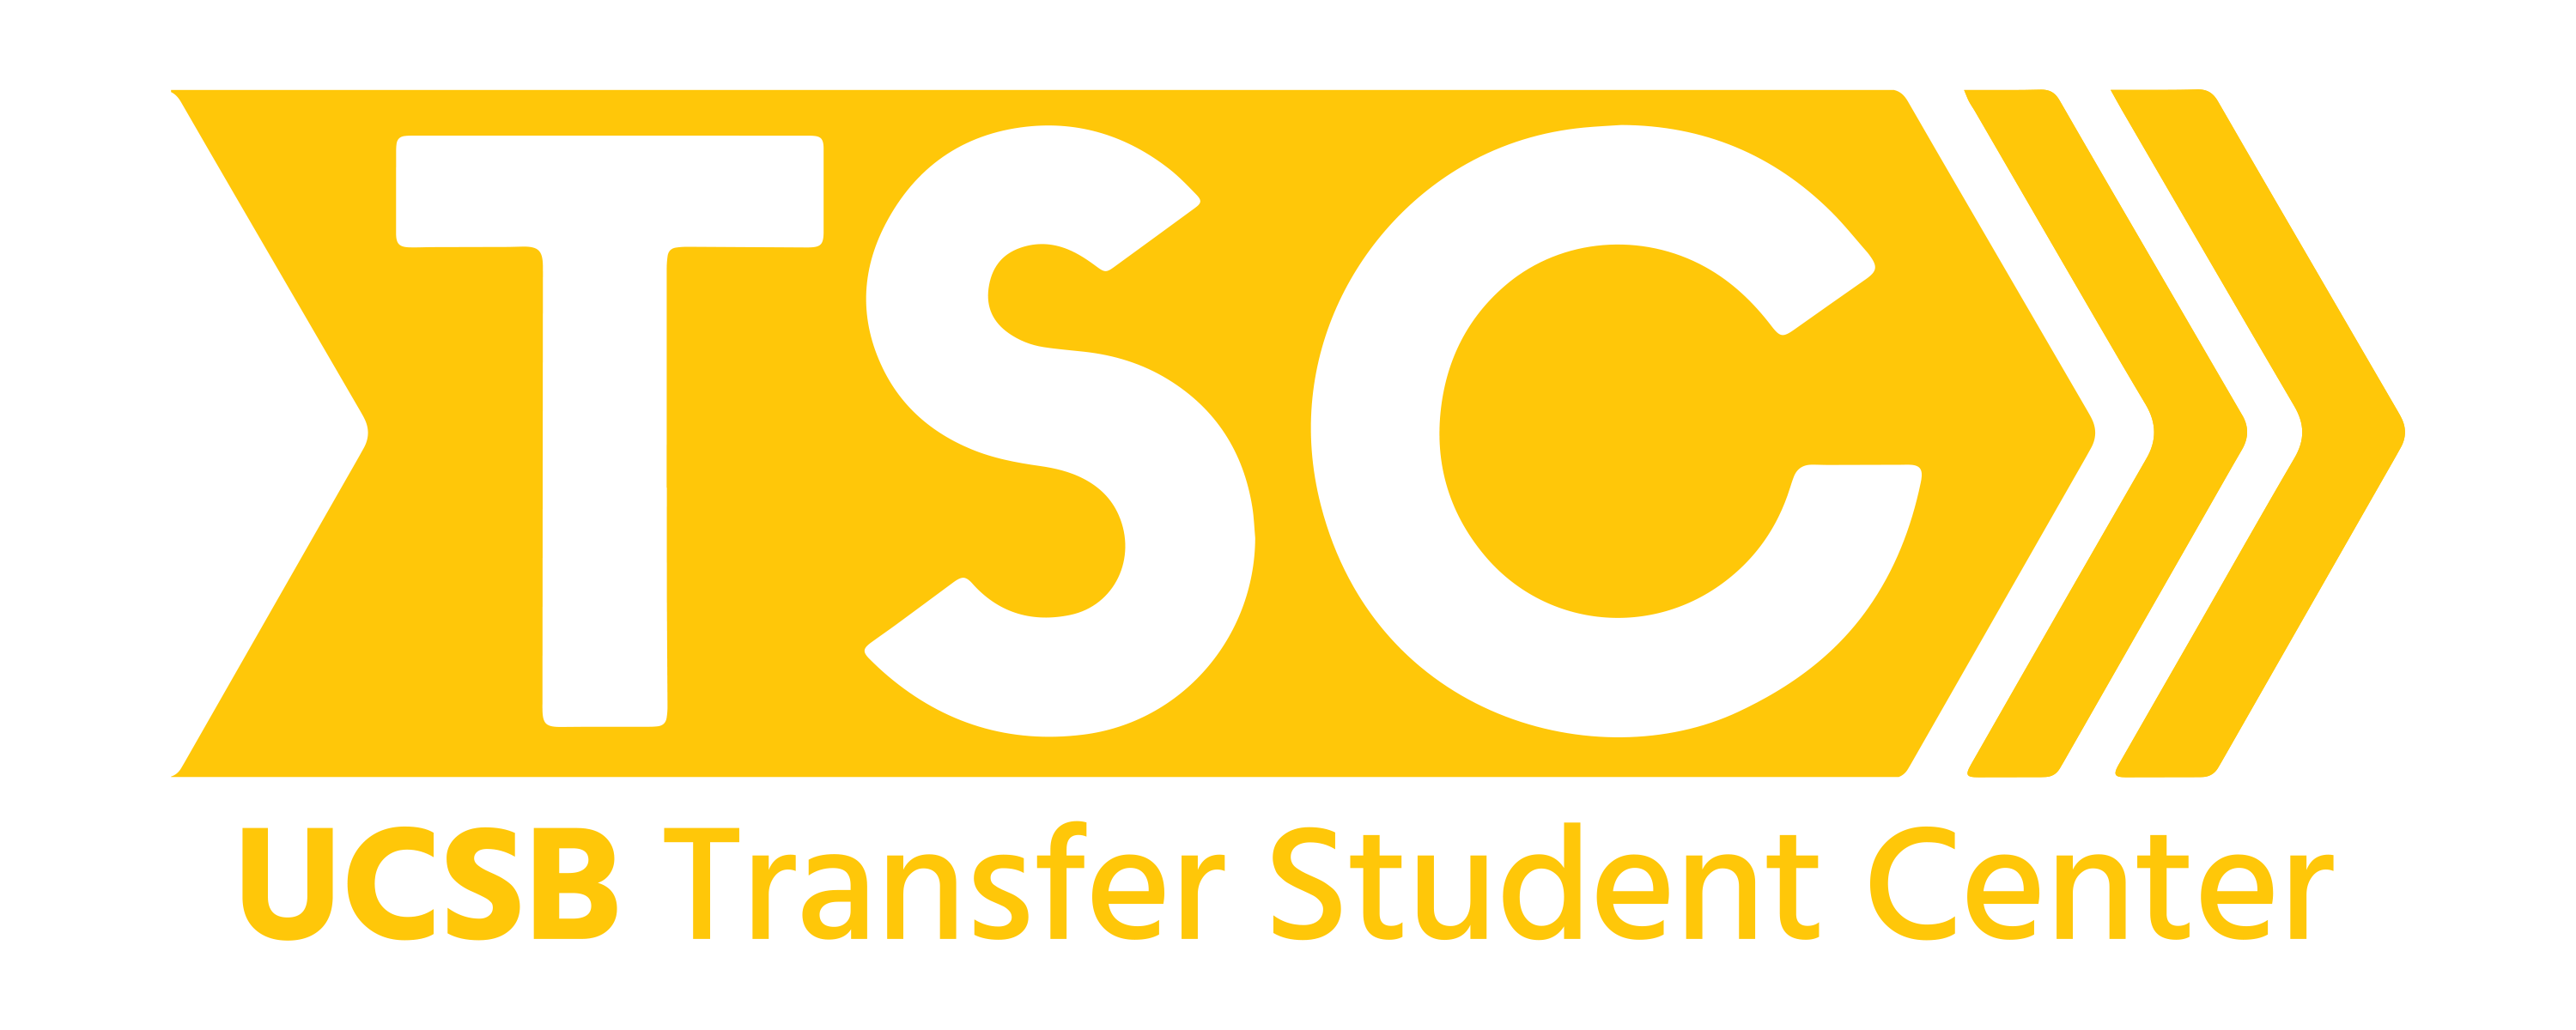 Transfer Student Center - UC Santa Barbara